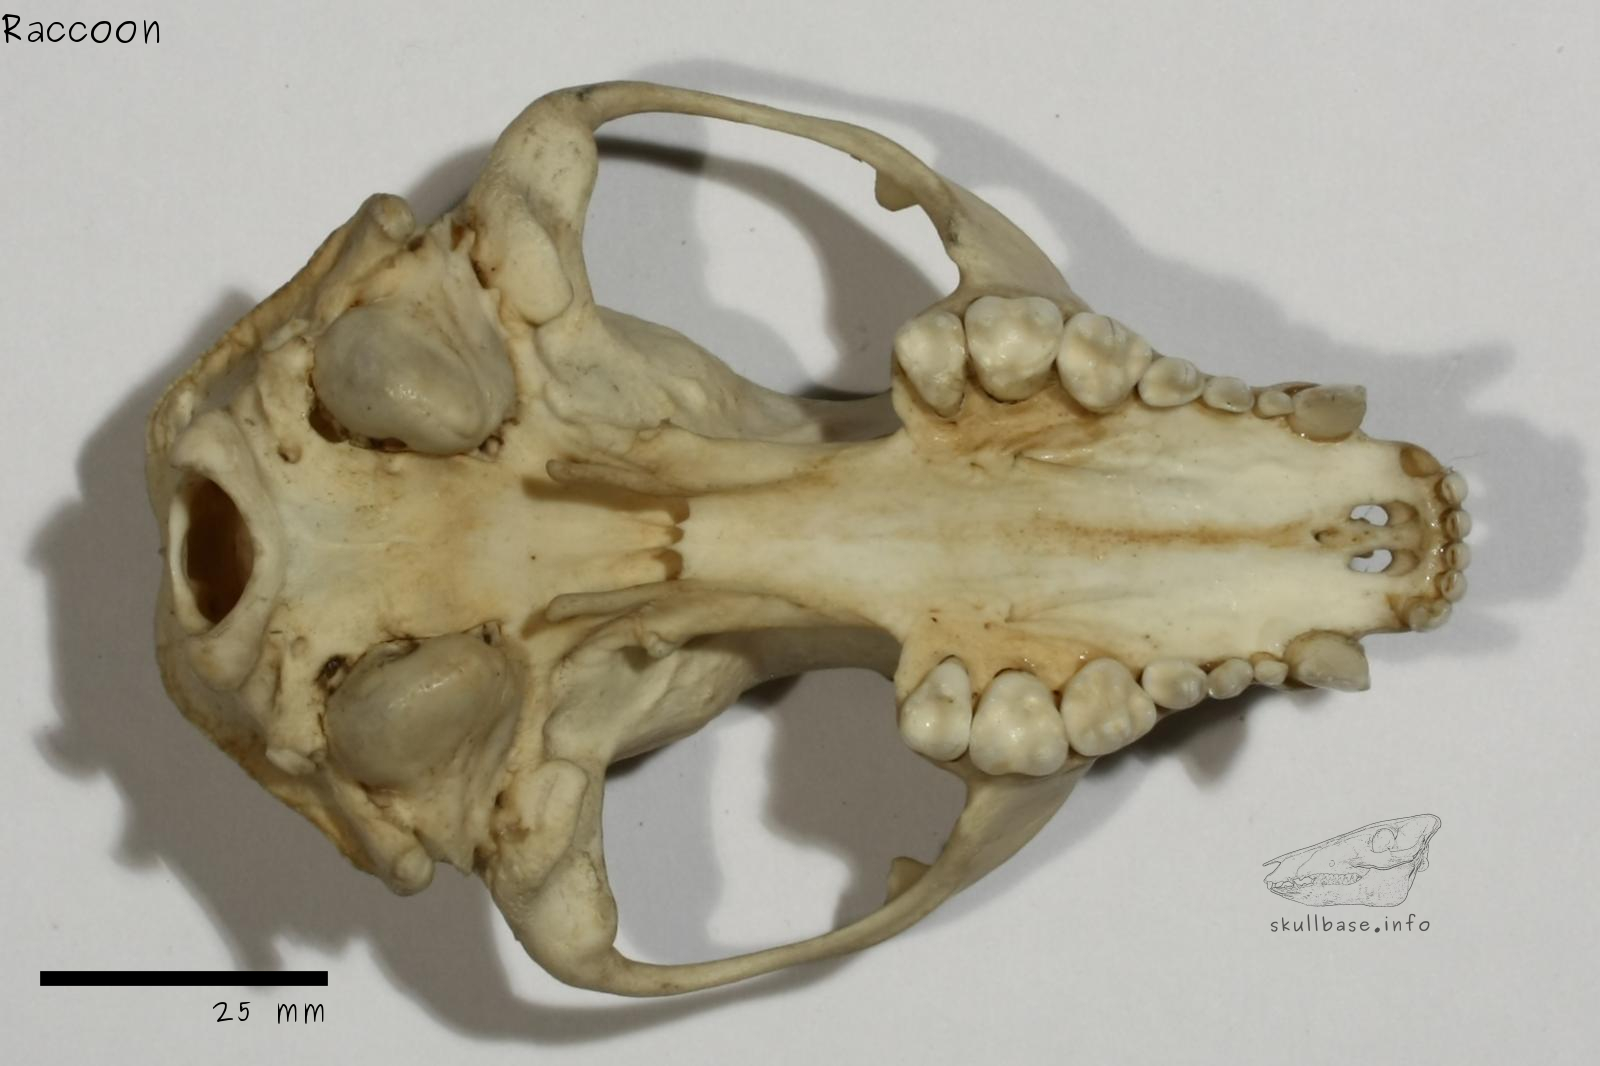 Raccoon (Procyon lotor) skull ventral view